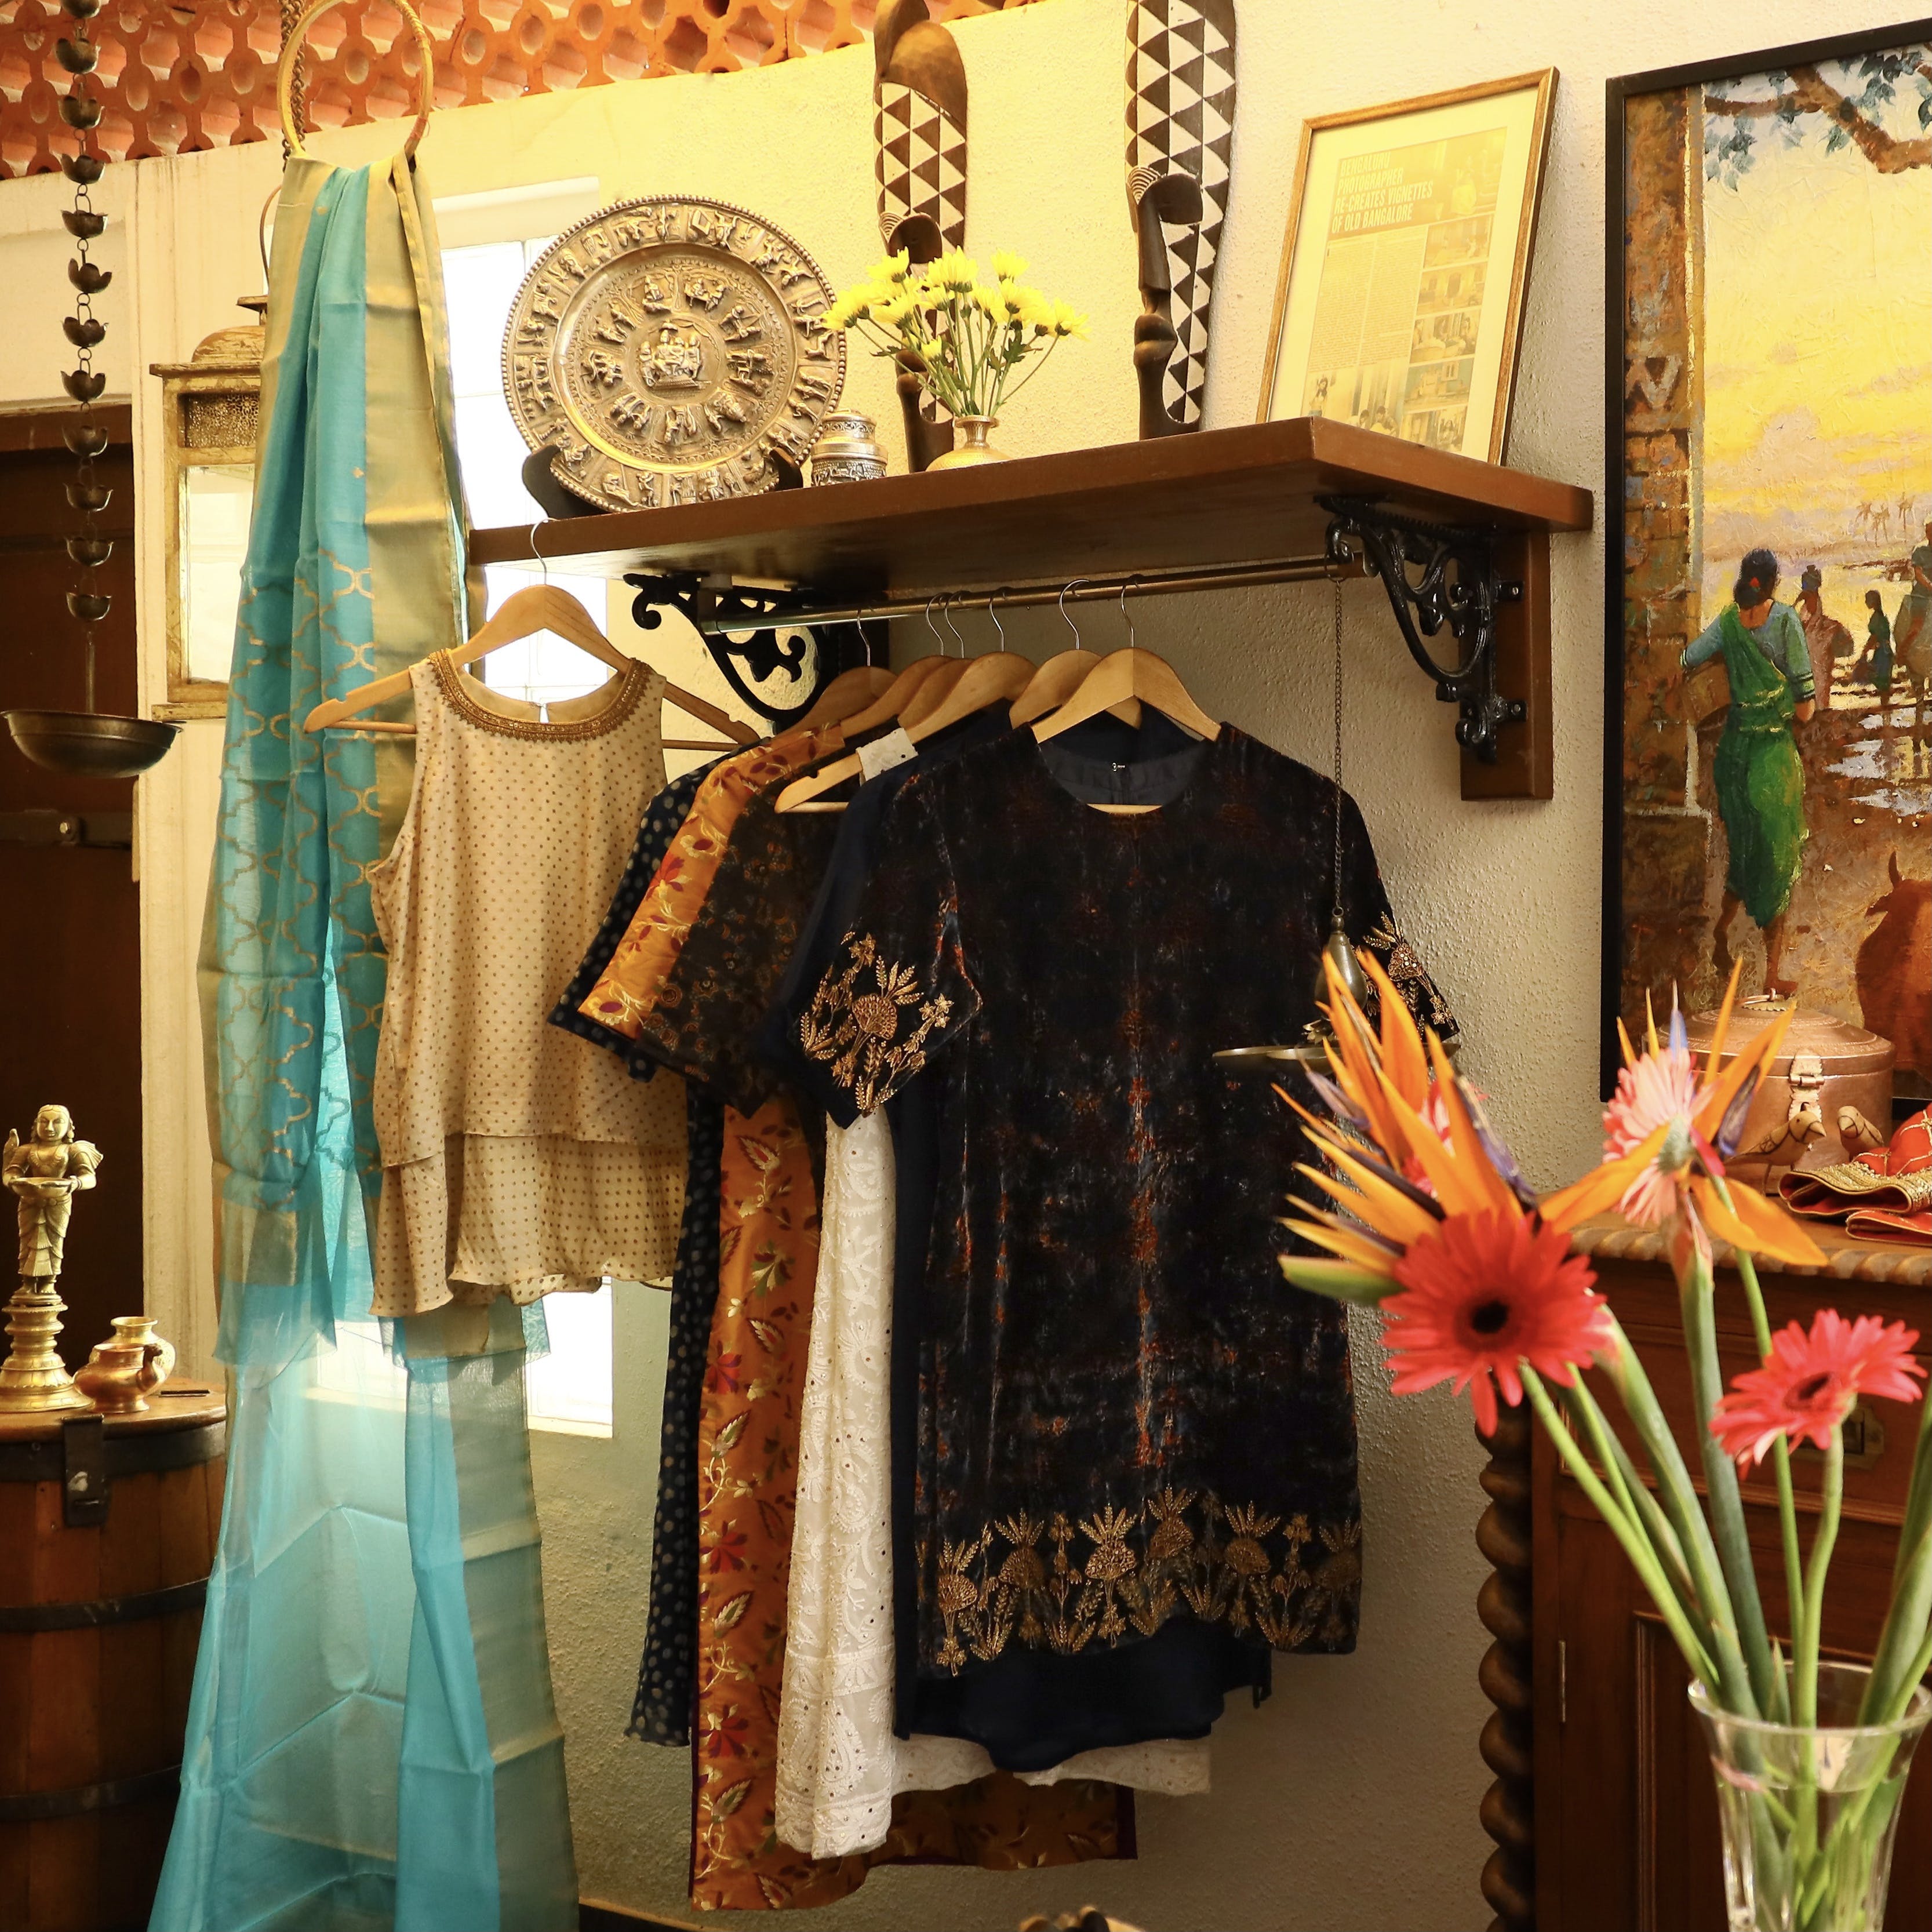 Flower,Picture frame,Interior design,Yellow,Plant,Clothes hanger,Retail,Event,Flower Arranging,Religious item